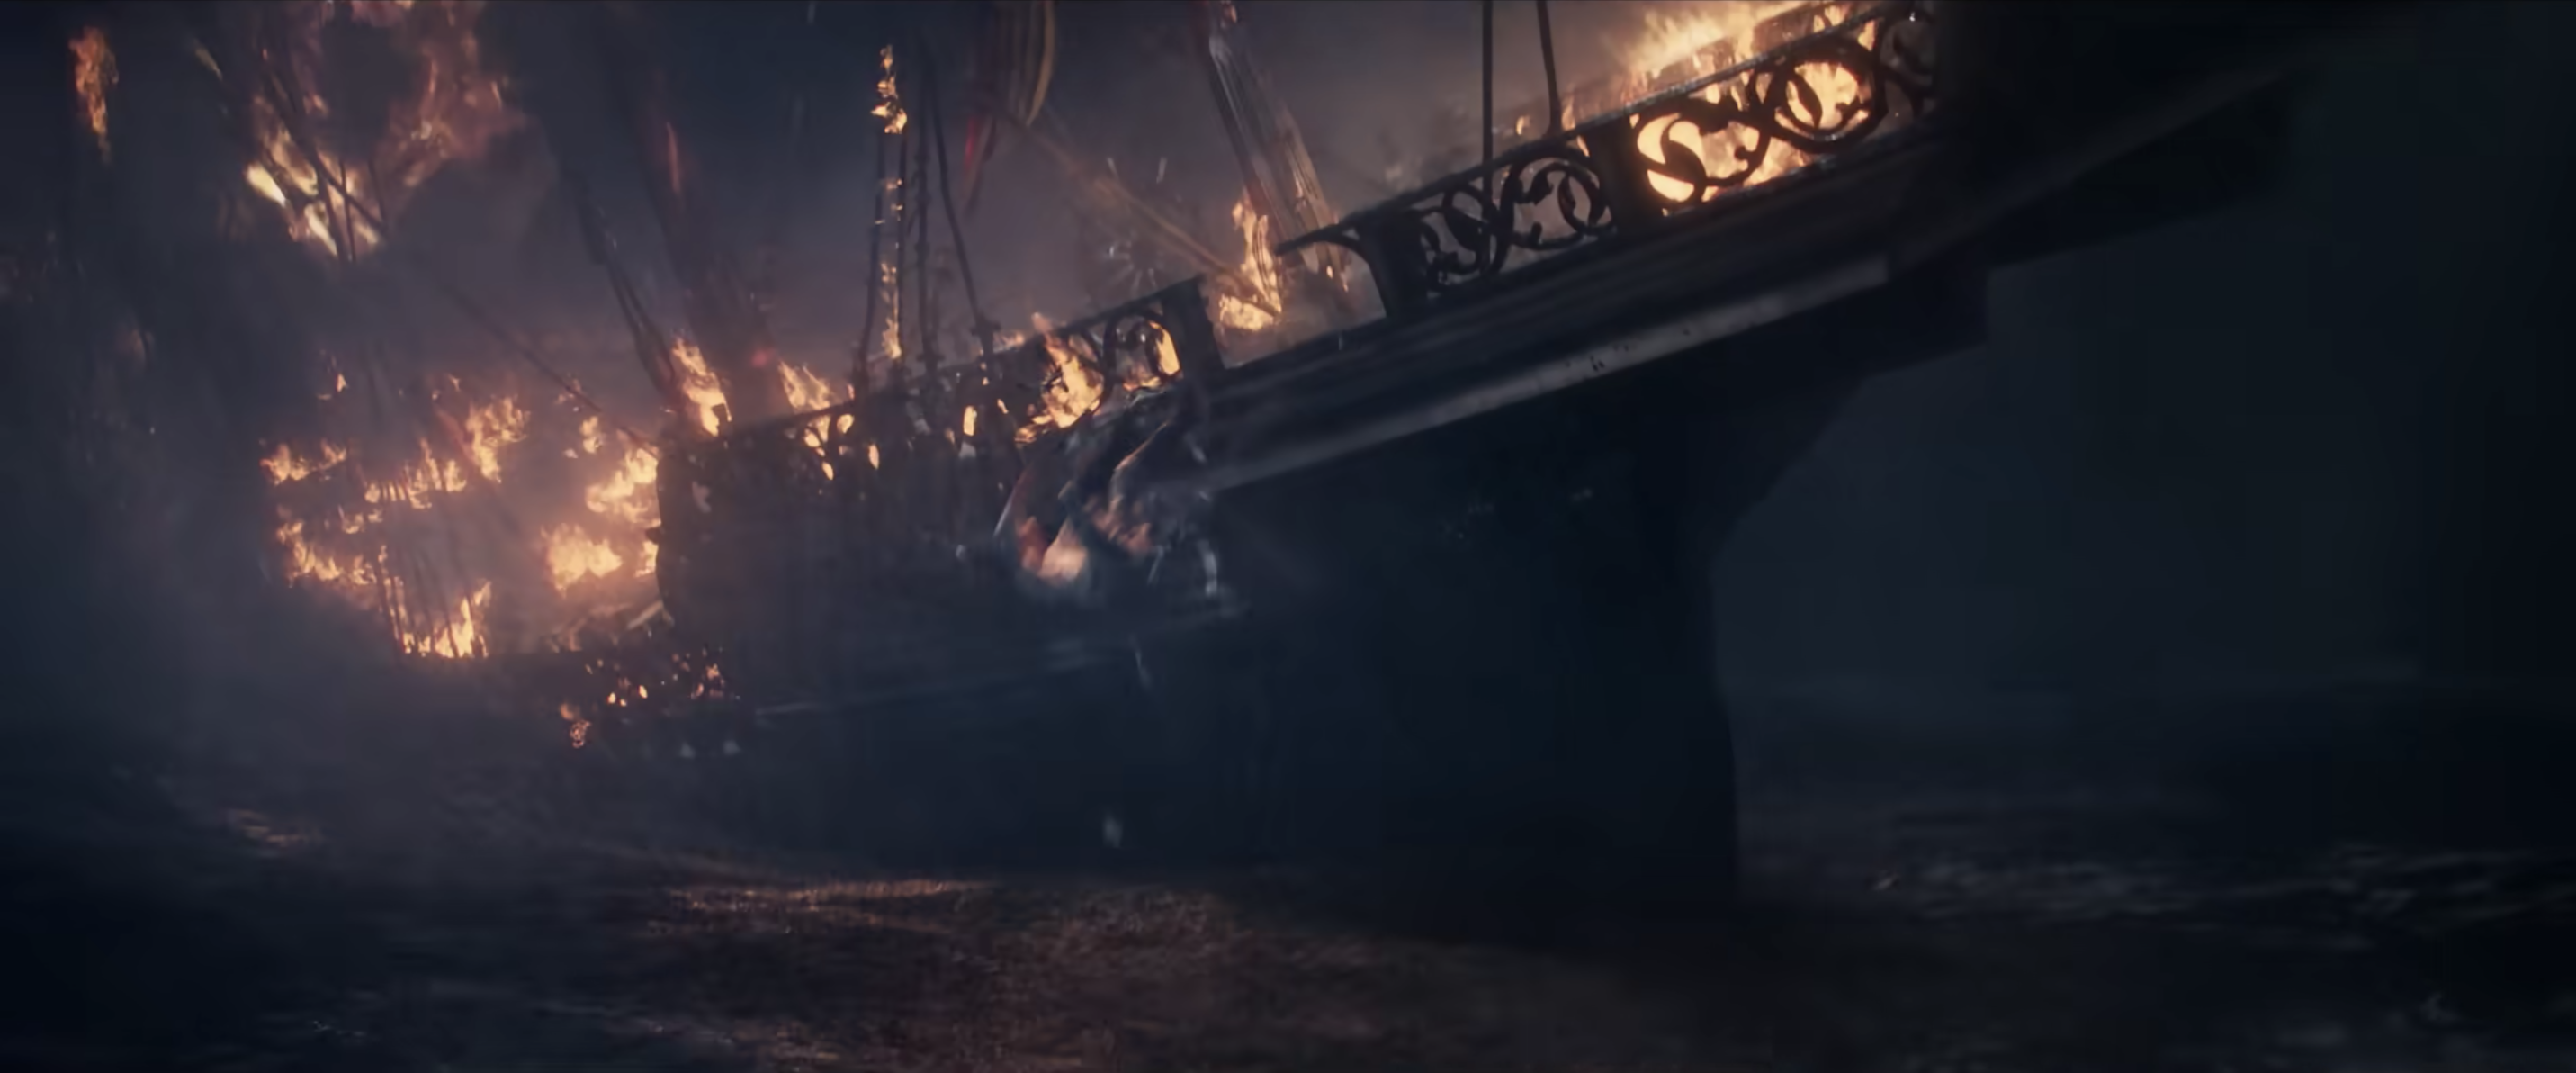 A ship on fire